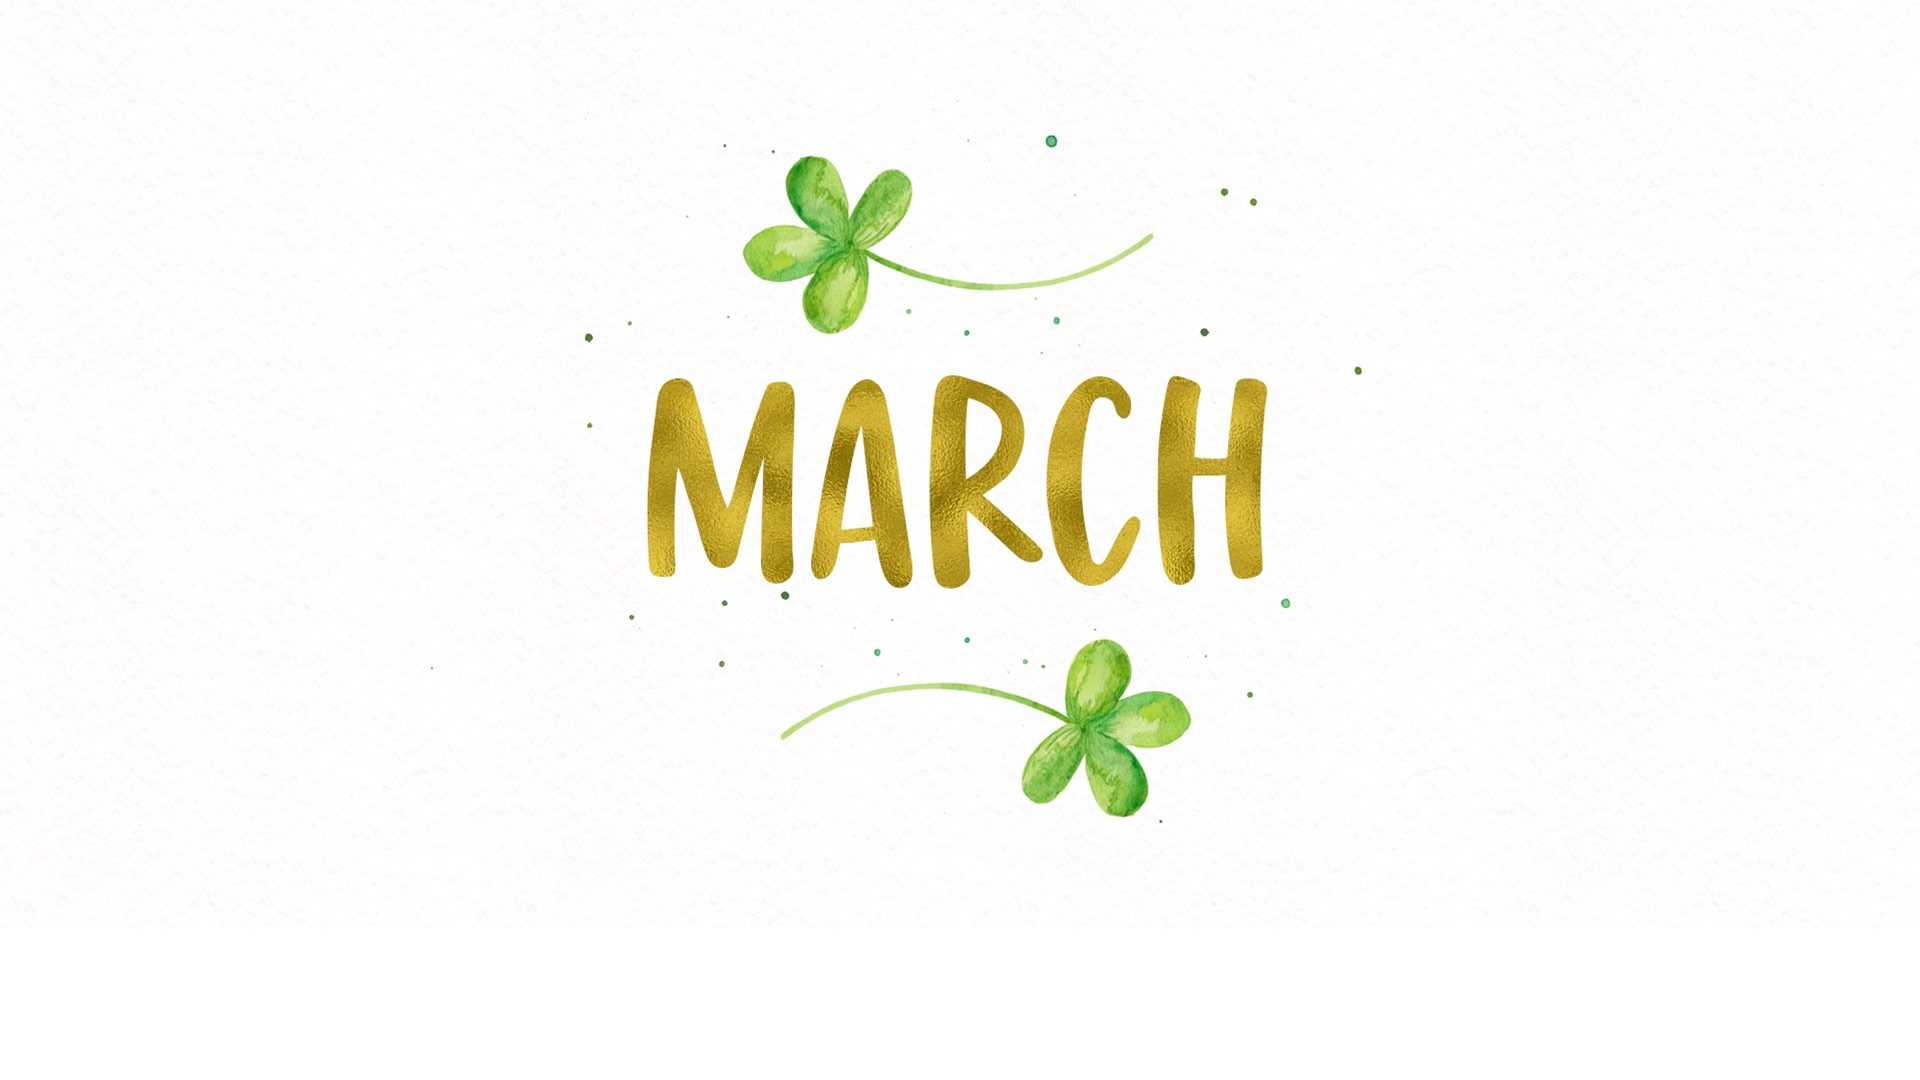 March please. Март надпись. March надпись. Март надпись красивая. March картинки.